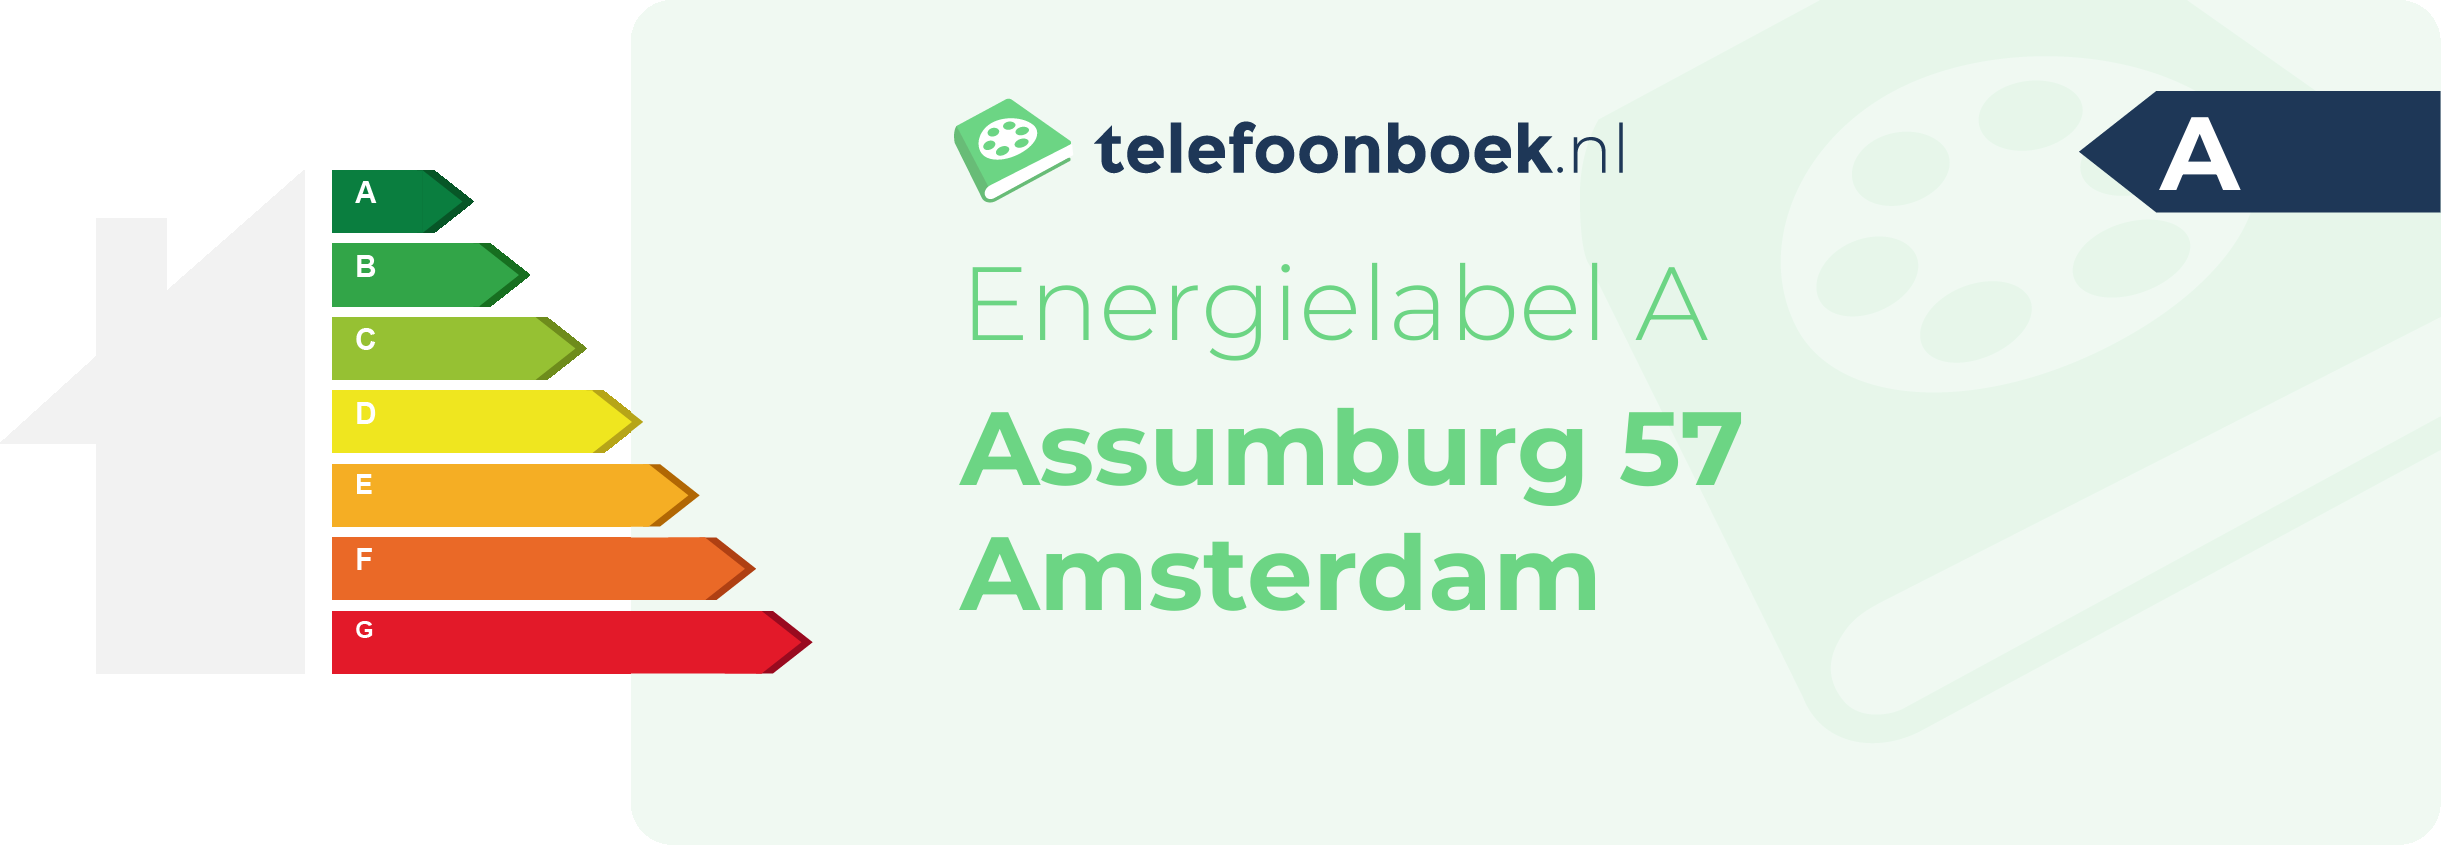 Energielabel Assumburg 57 Amsterdam